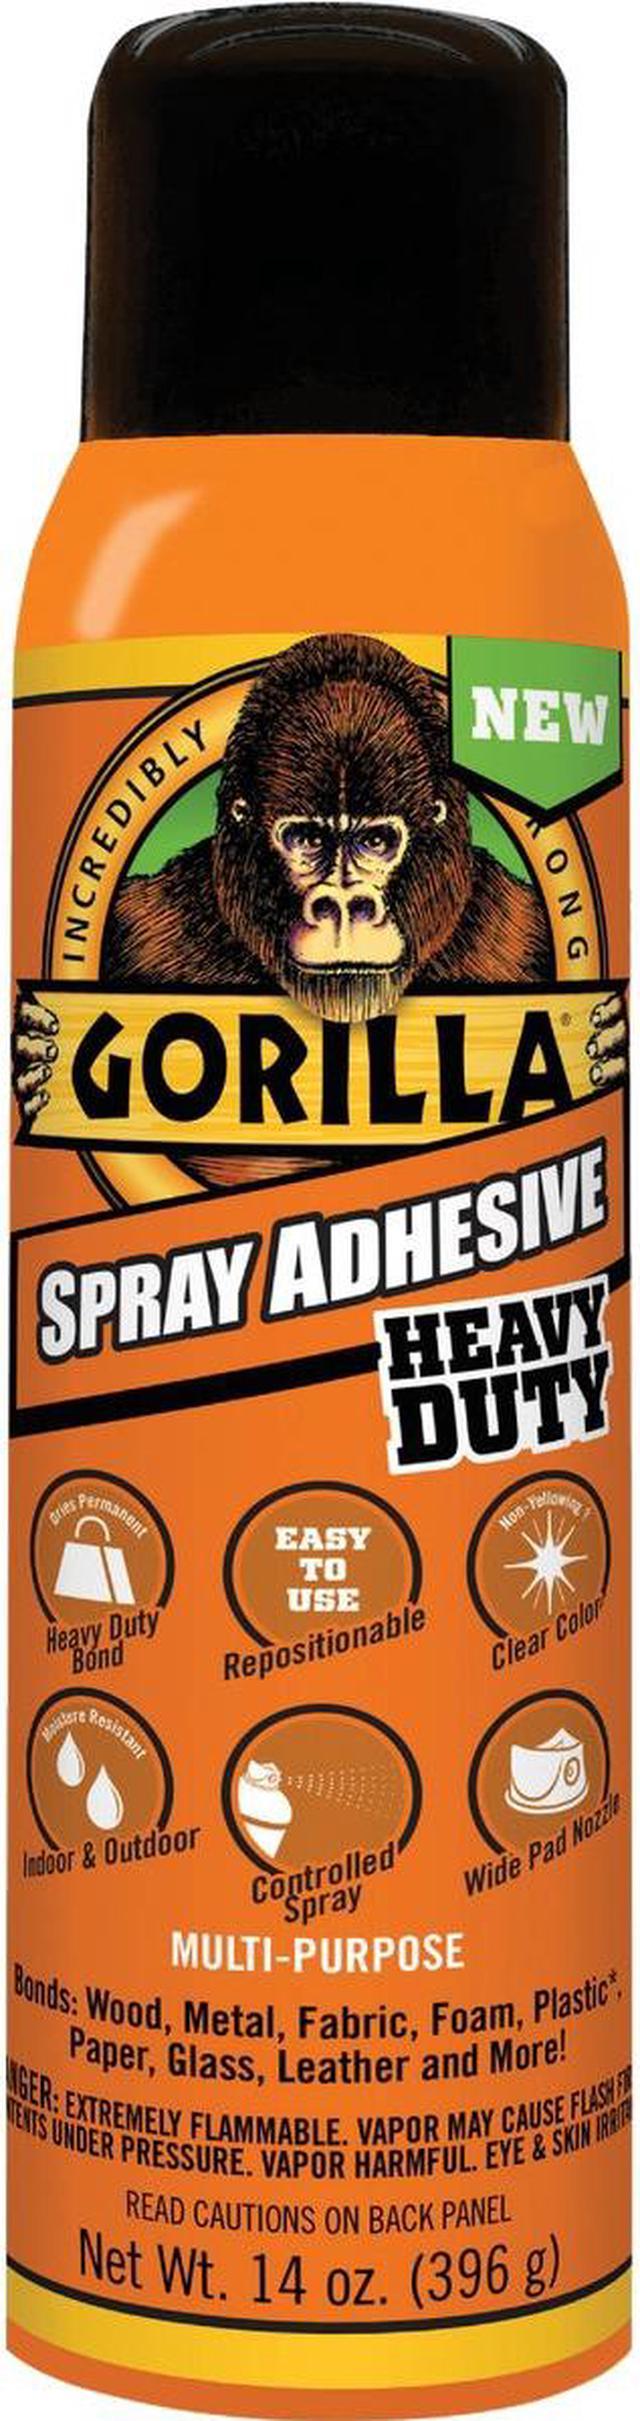 Spray Rite Heavy Duty Spray Adhesive